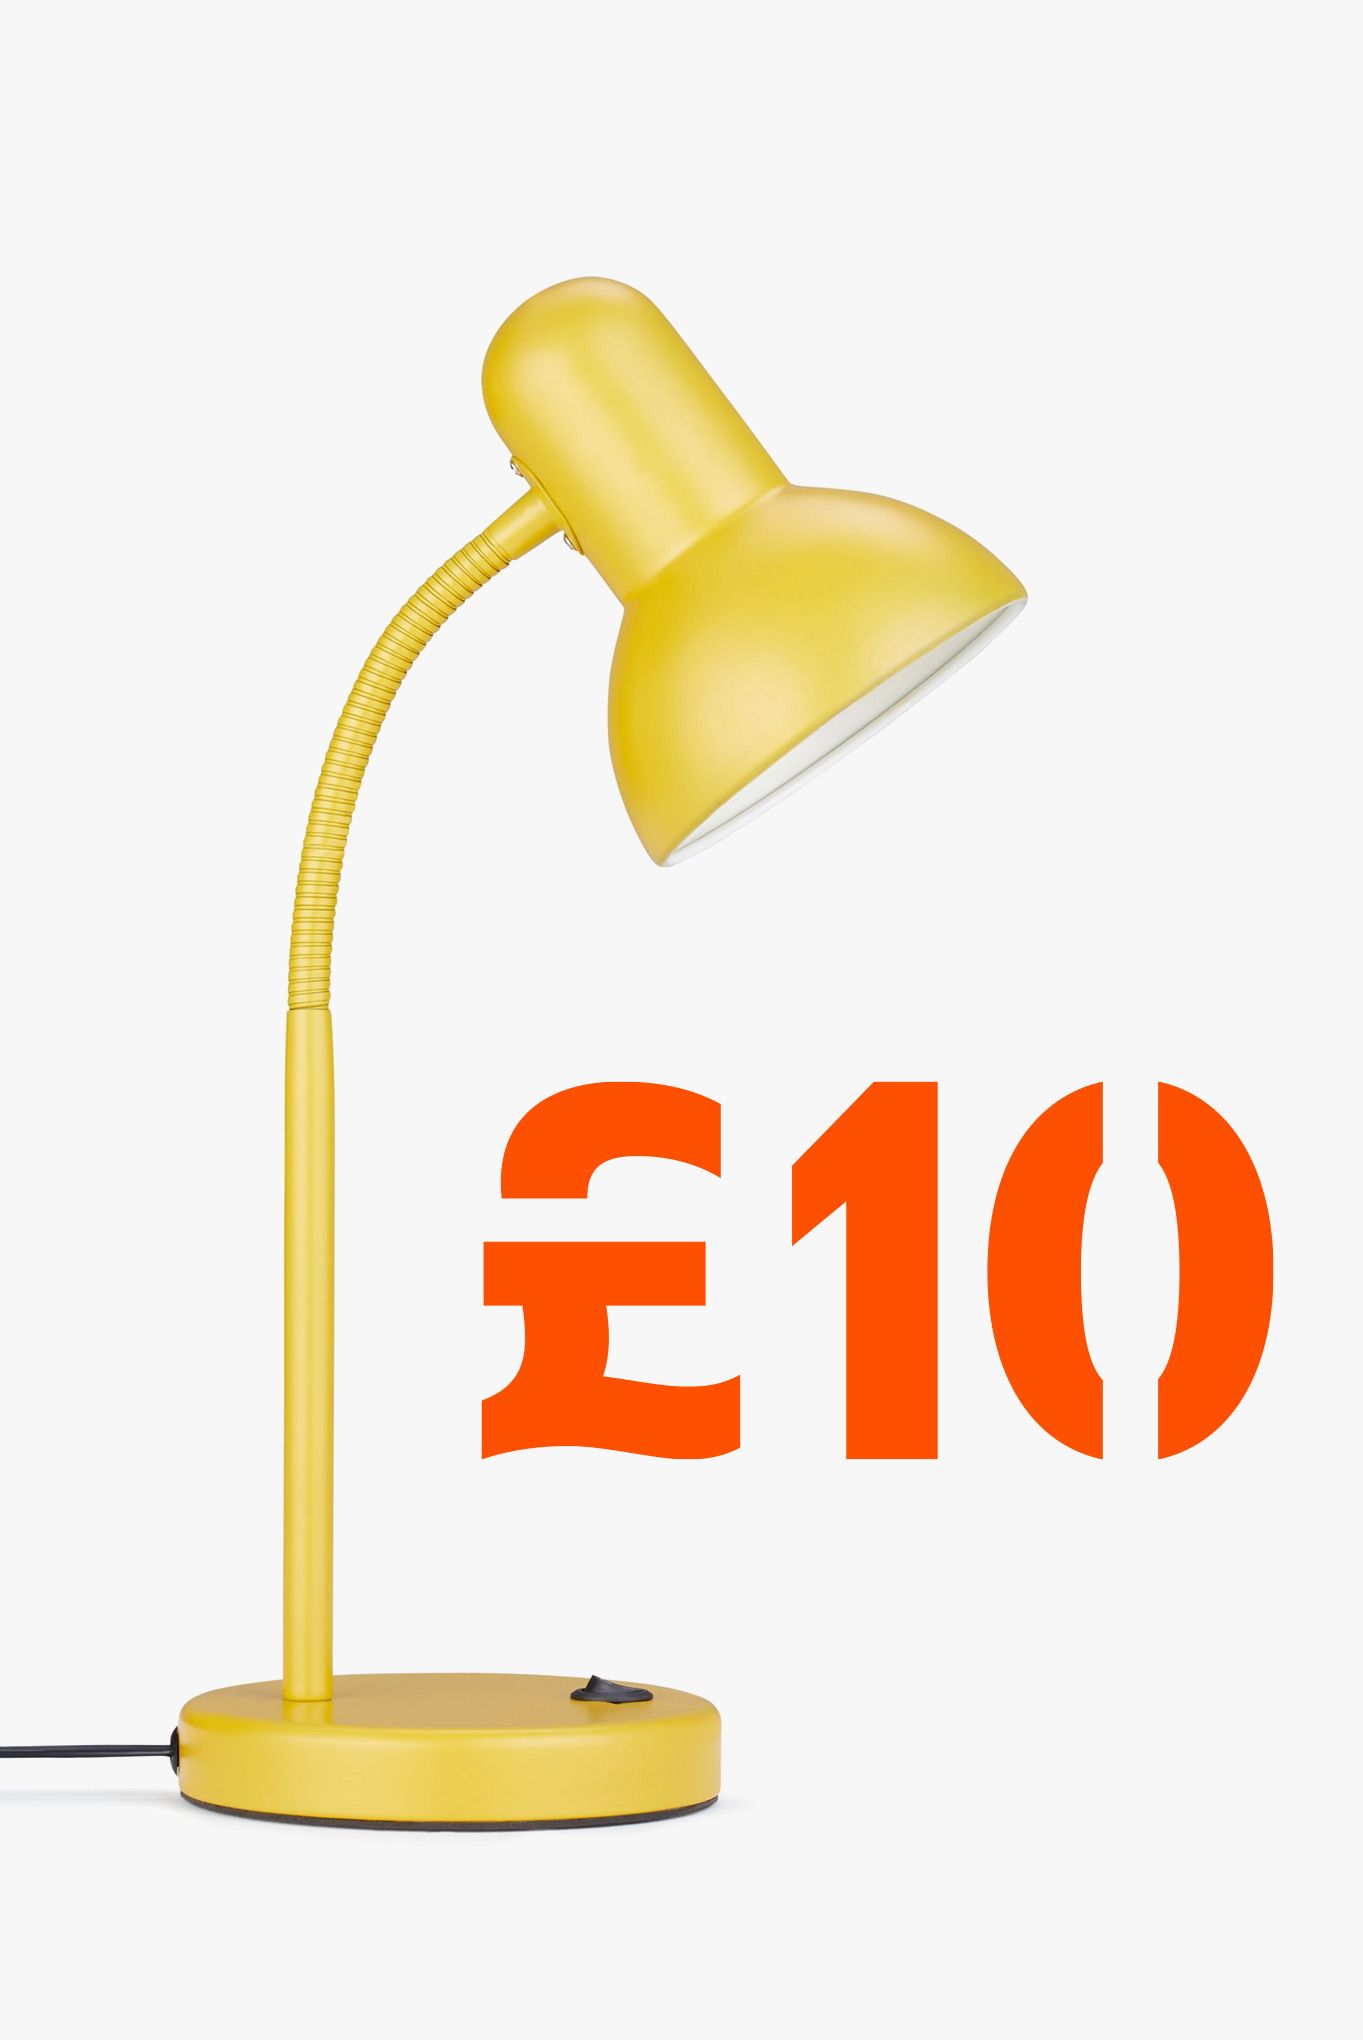 ANYDAY John Lewis & Partners Brandon Desk Lamp, Mustard £10.00